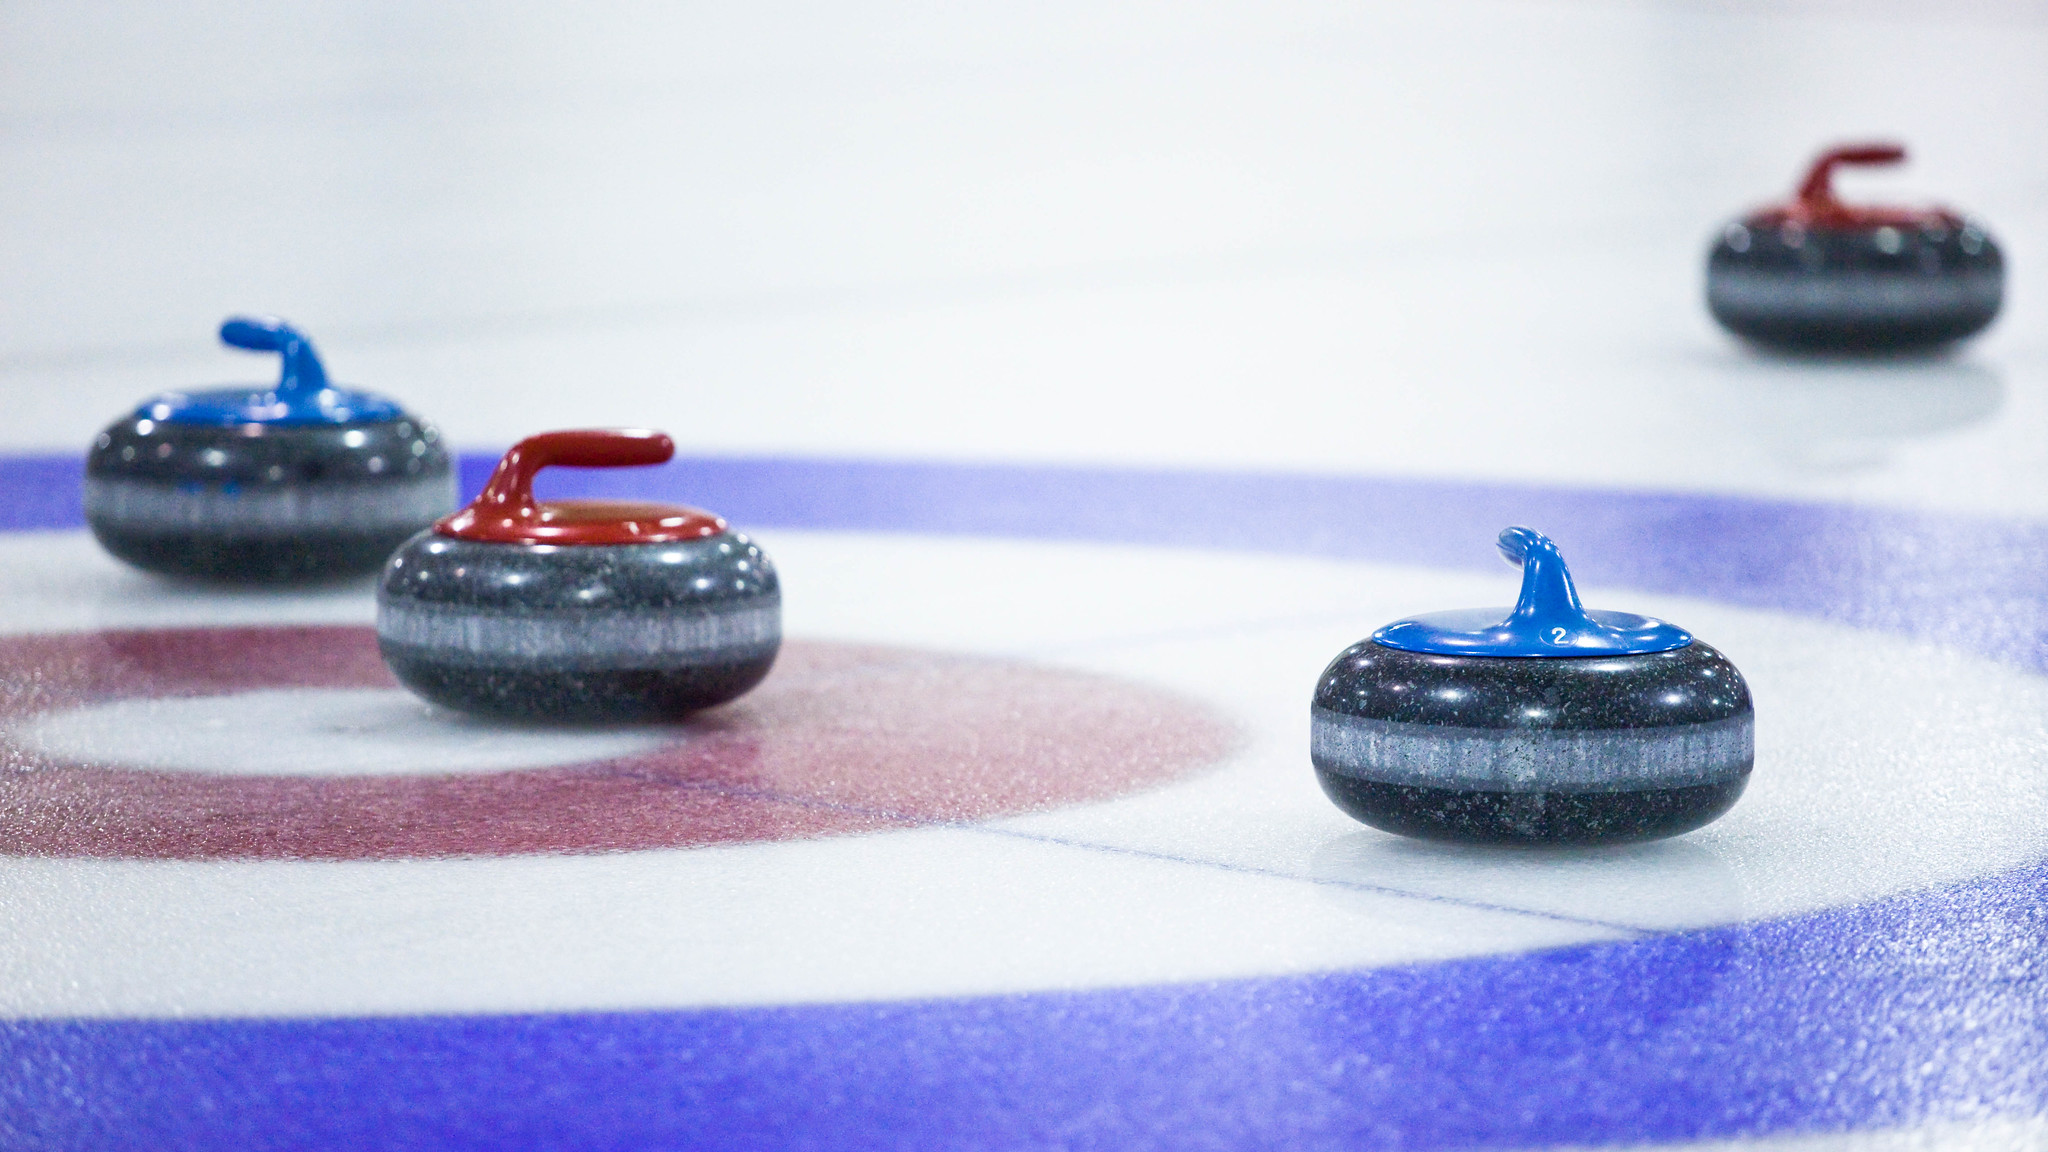 The Strange Asymmetry of Curling